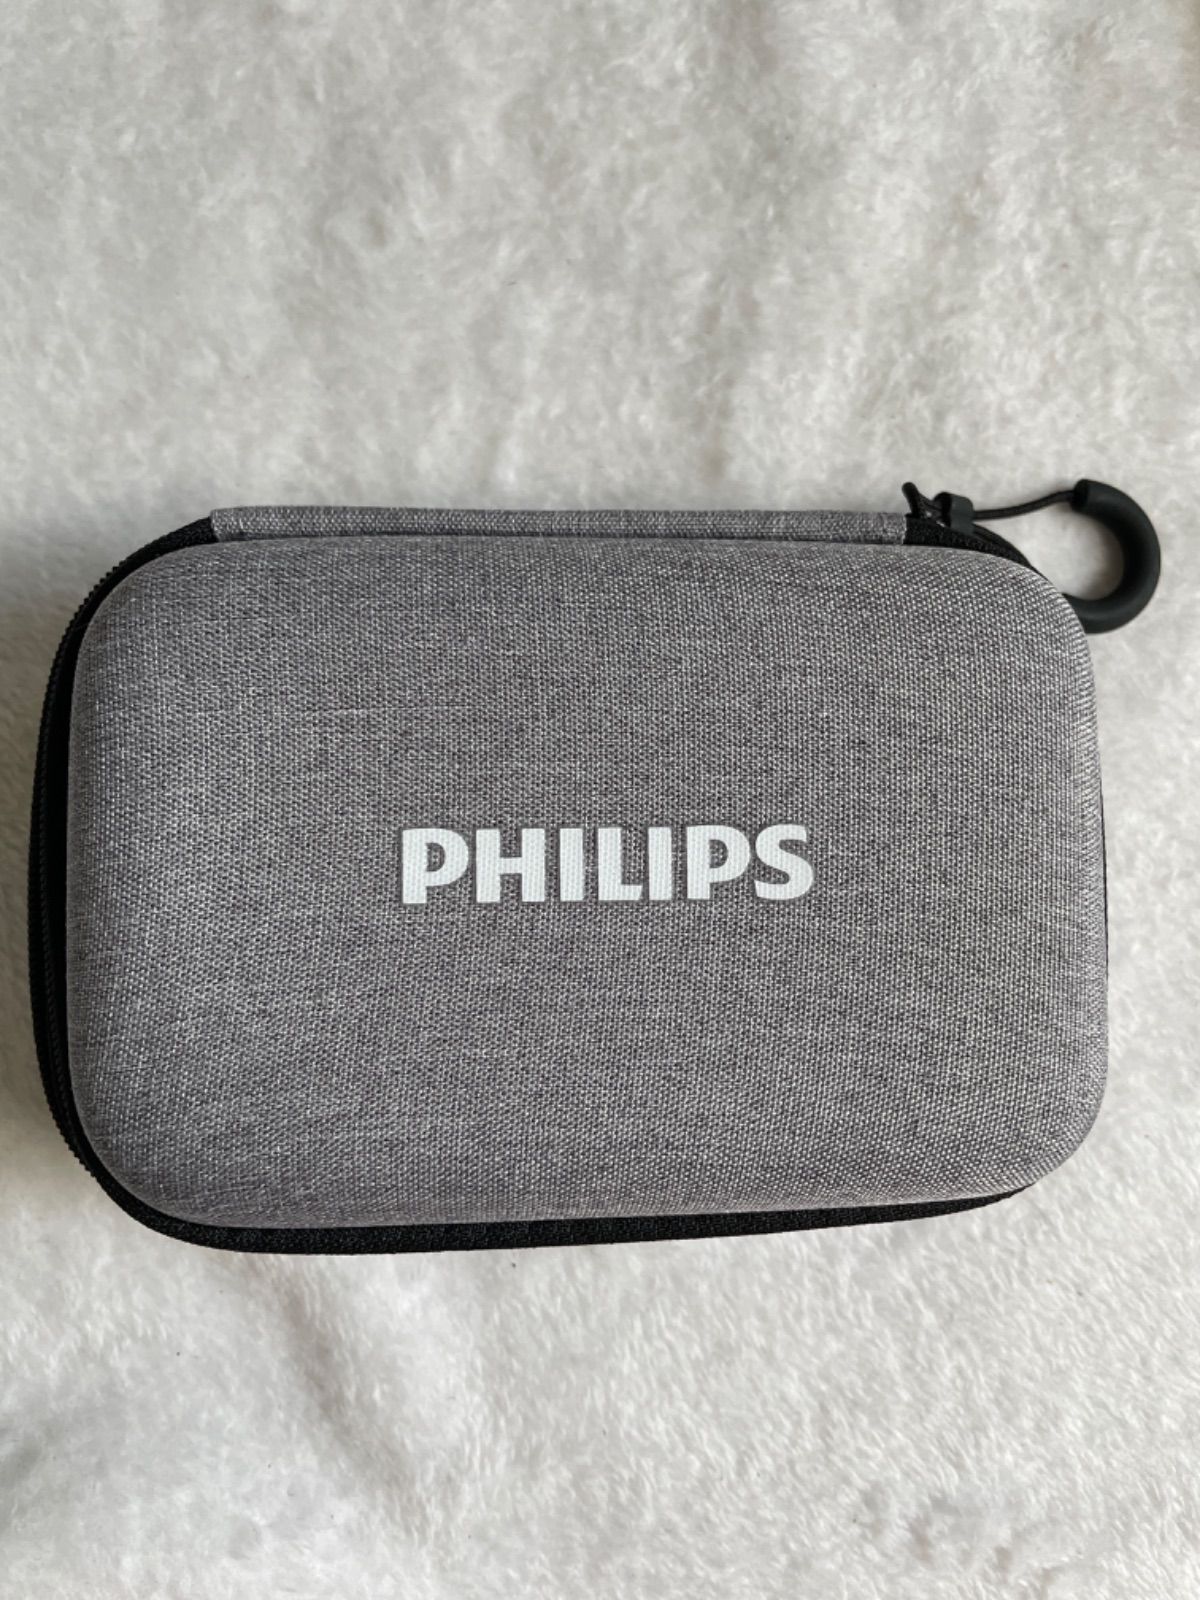 Philips(フィリップス) 【2.4GHz ワイヤレスマイク】360°集音